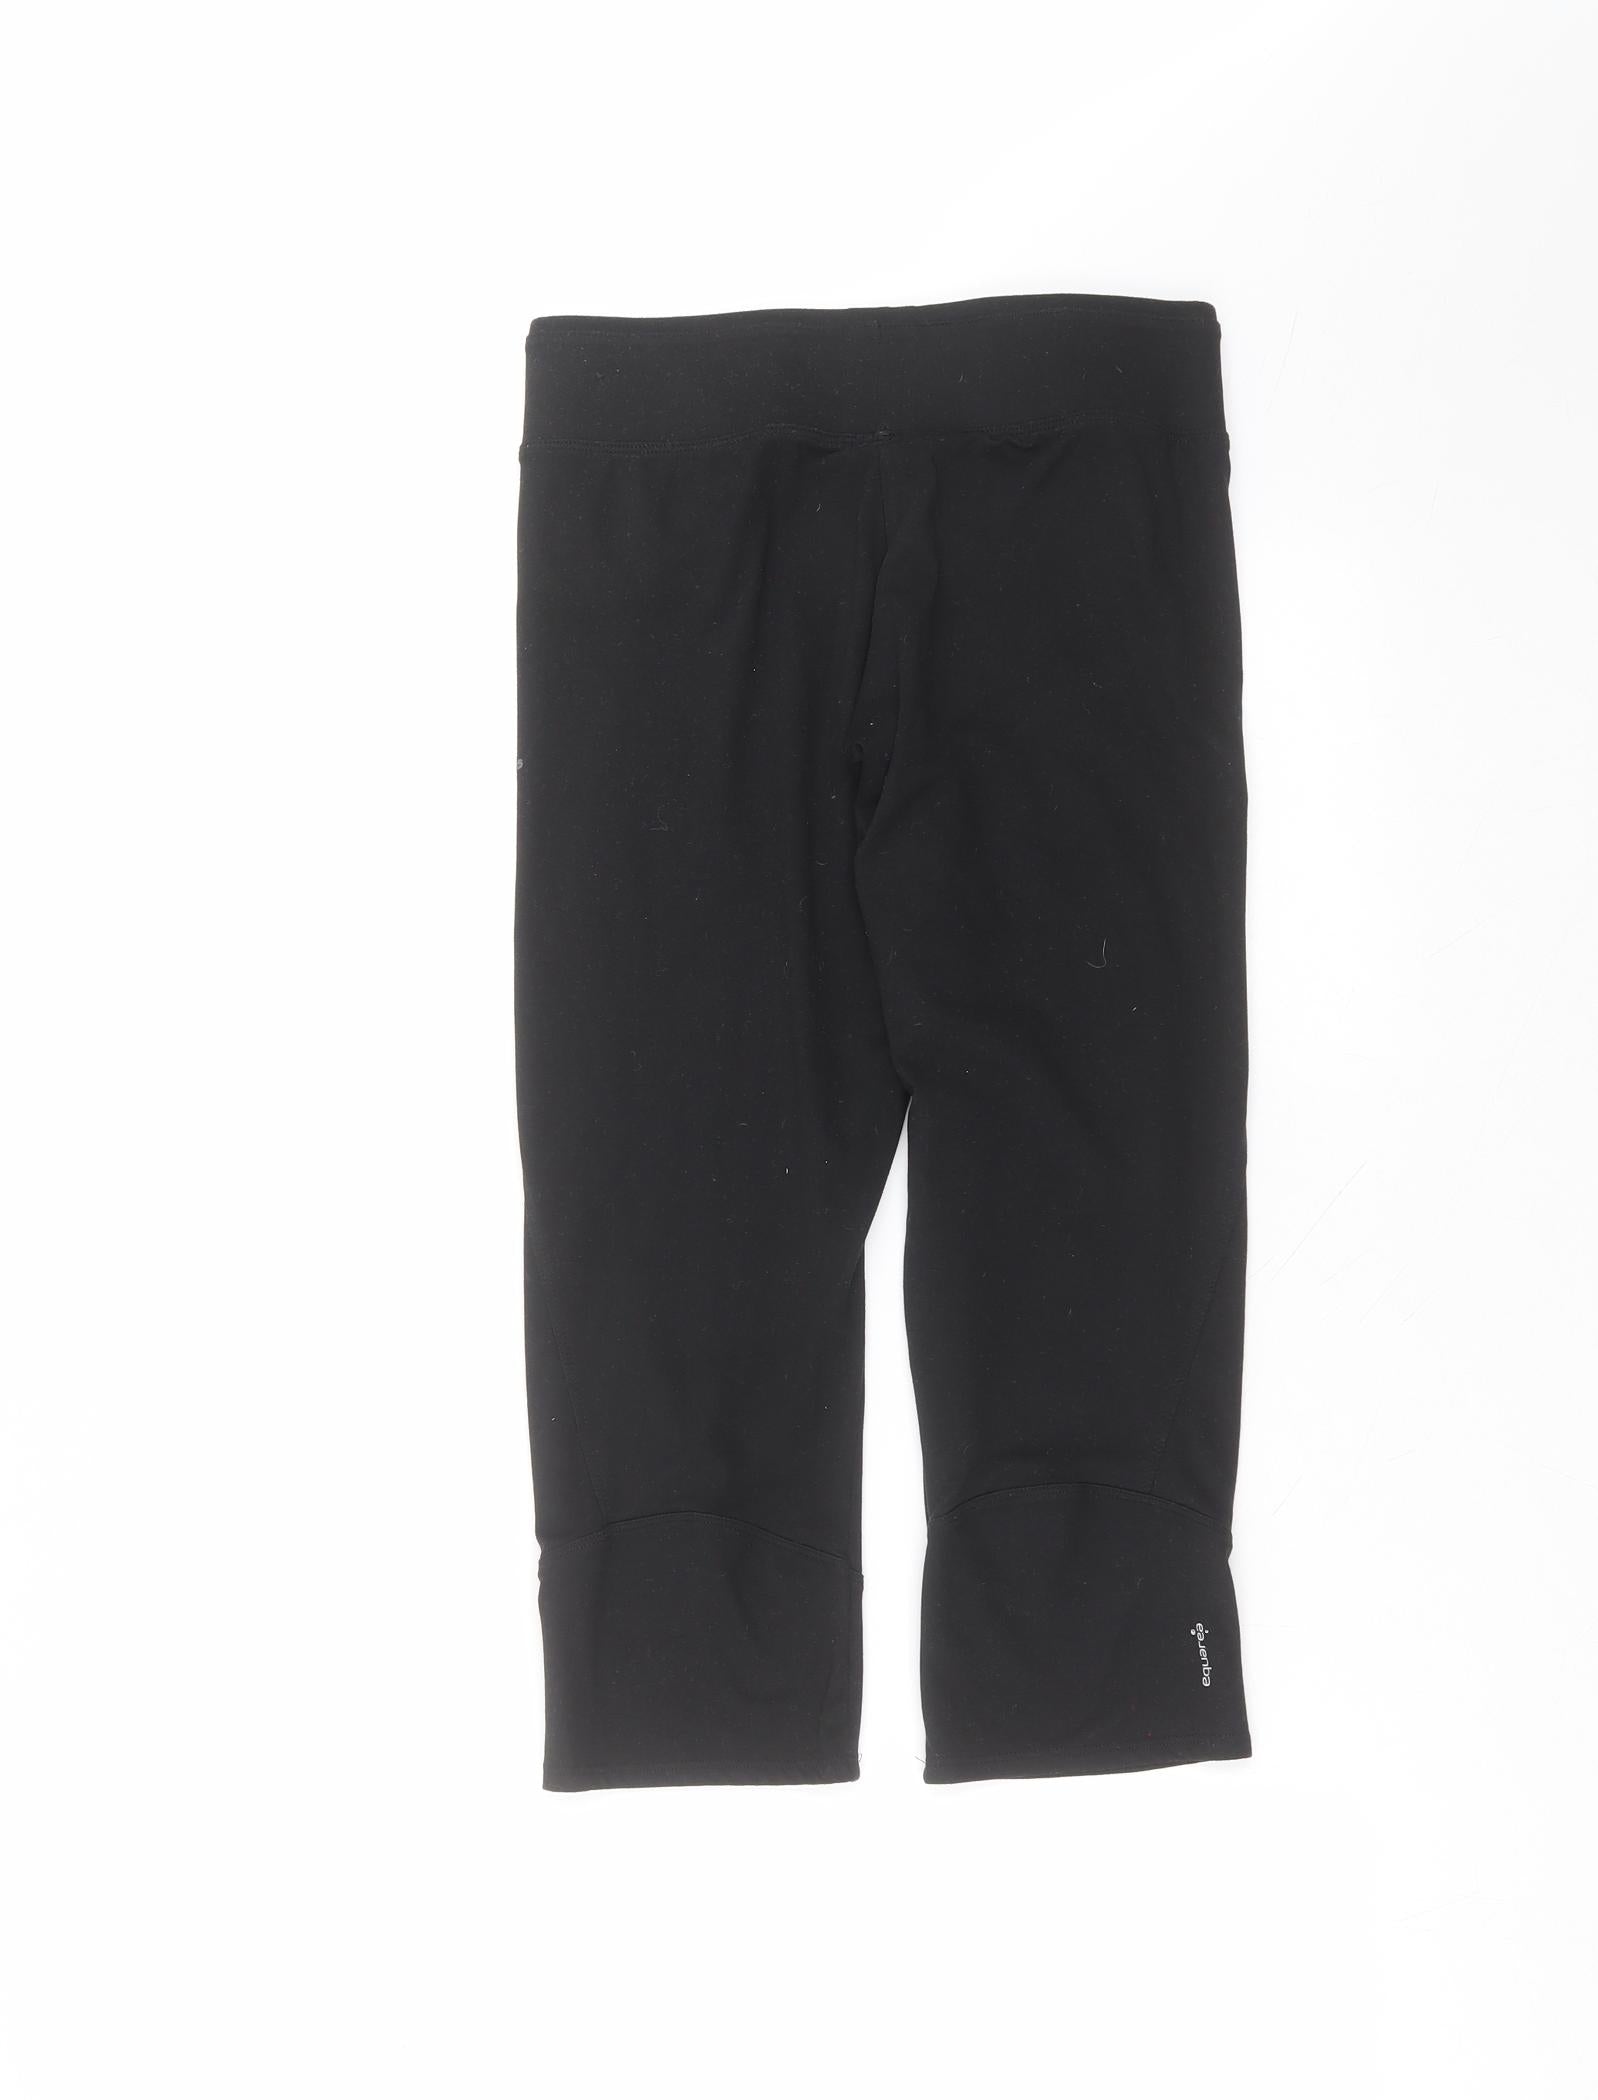 oxylane Womens Black Polyester Cropped Leggings Size S L22 in Regular – Preworn  Ltd